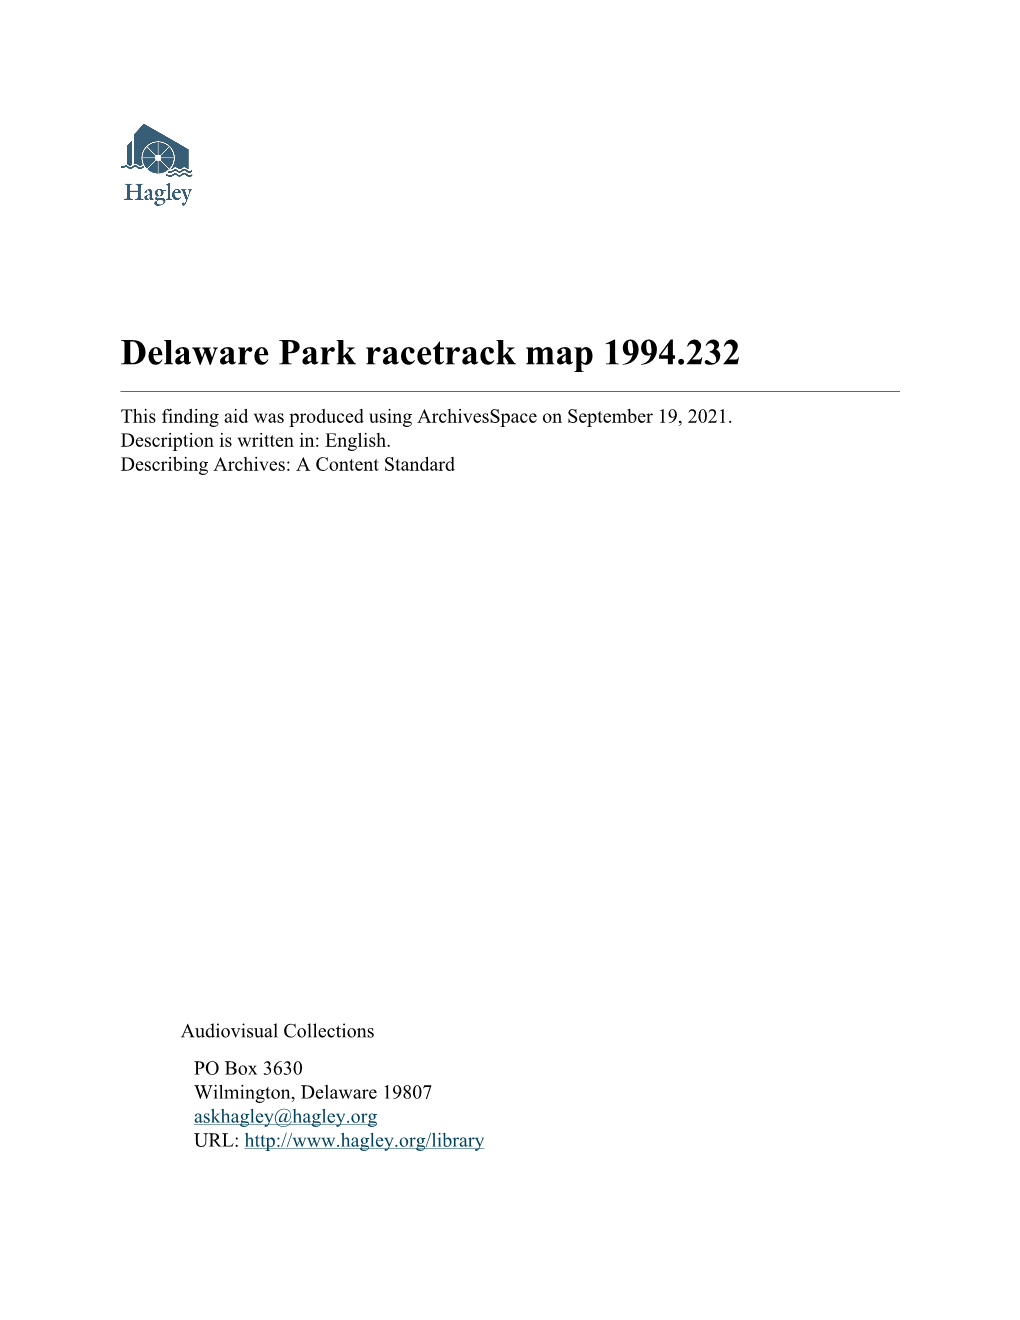 Delaware Park Racetrack Map 1994.232